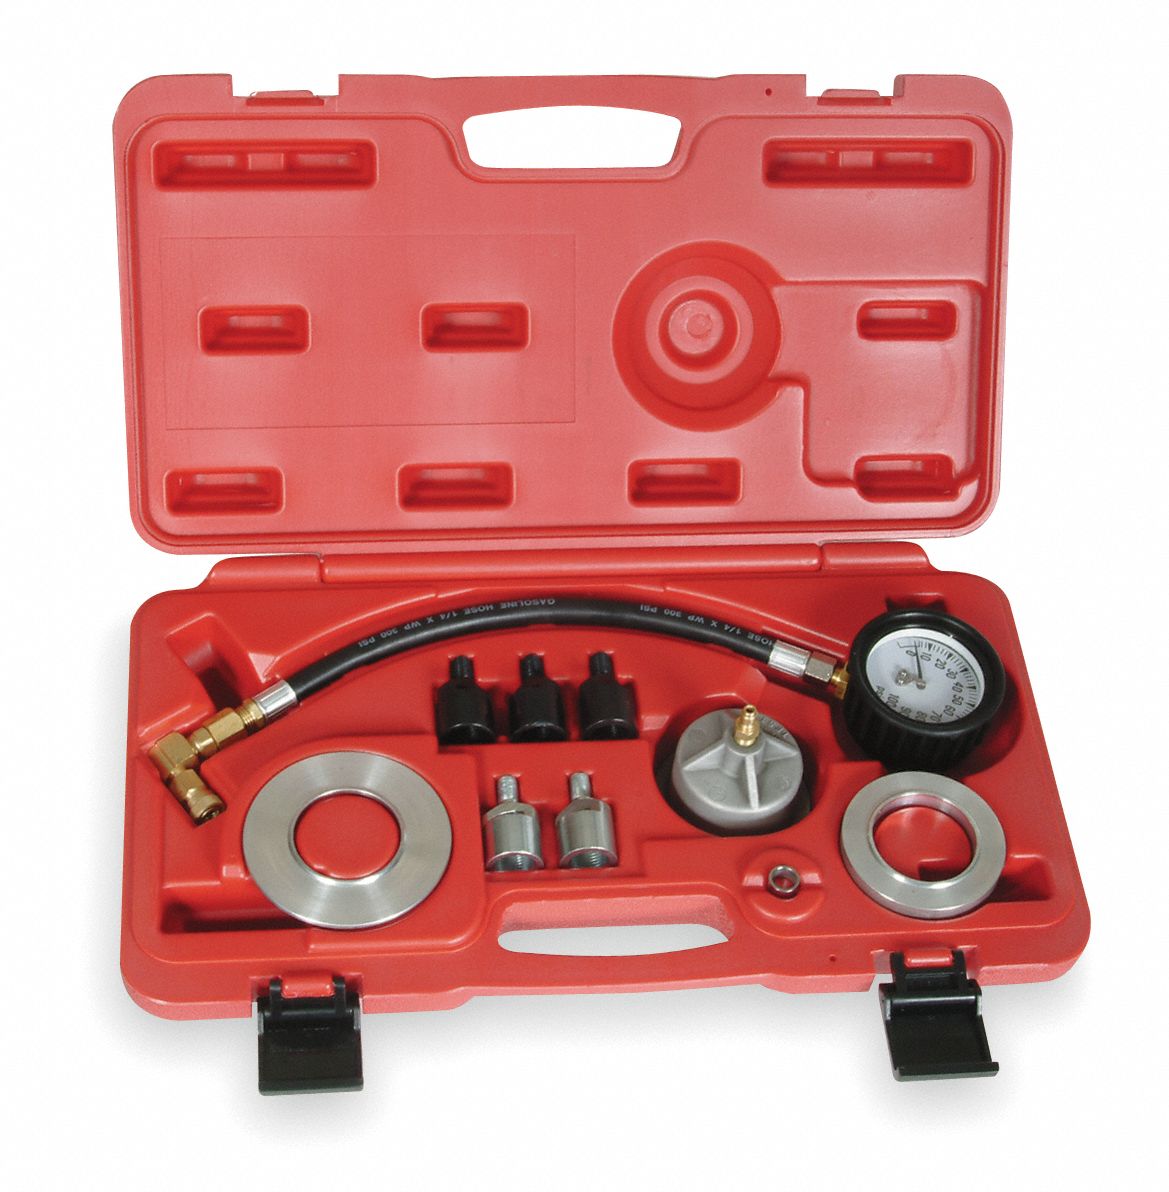 WESTWARD Oil Pressure Tester Kit   Tester Kits   1UBG3|1UBG3